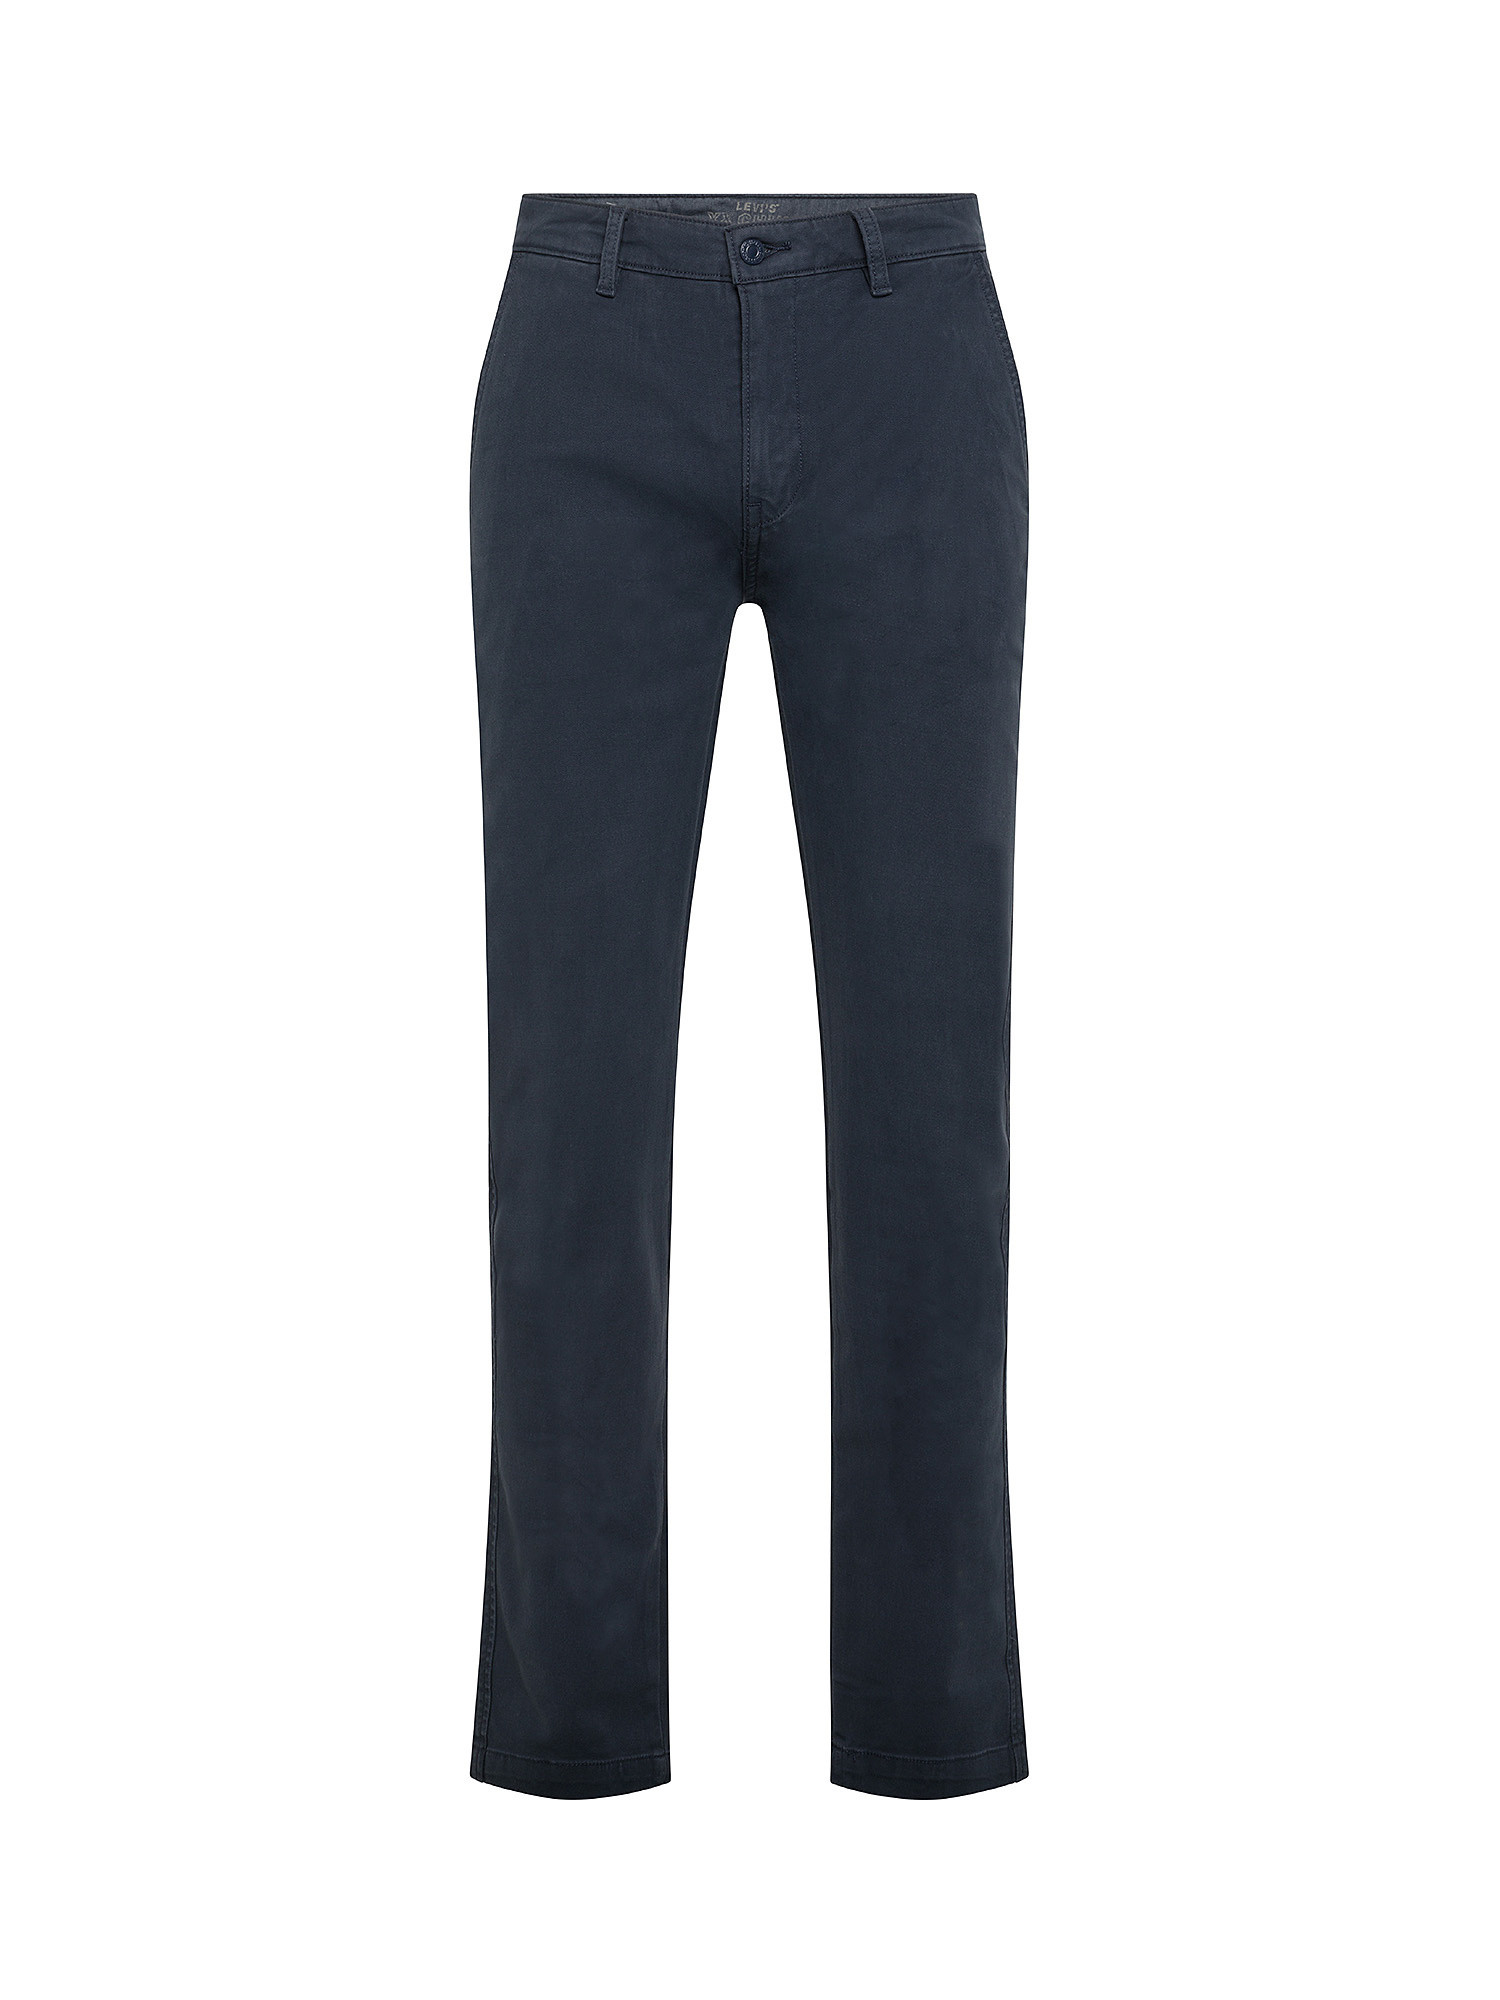 Levi's - Pantaloni chino slim fit, Blu scuro, large image number 0